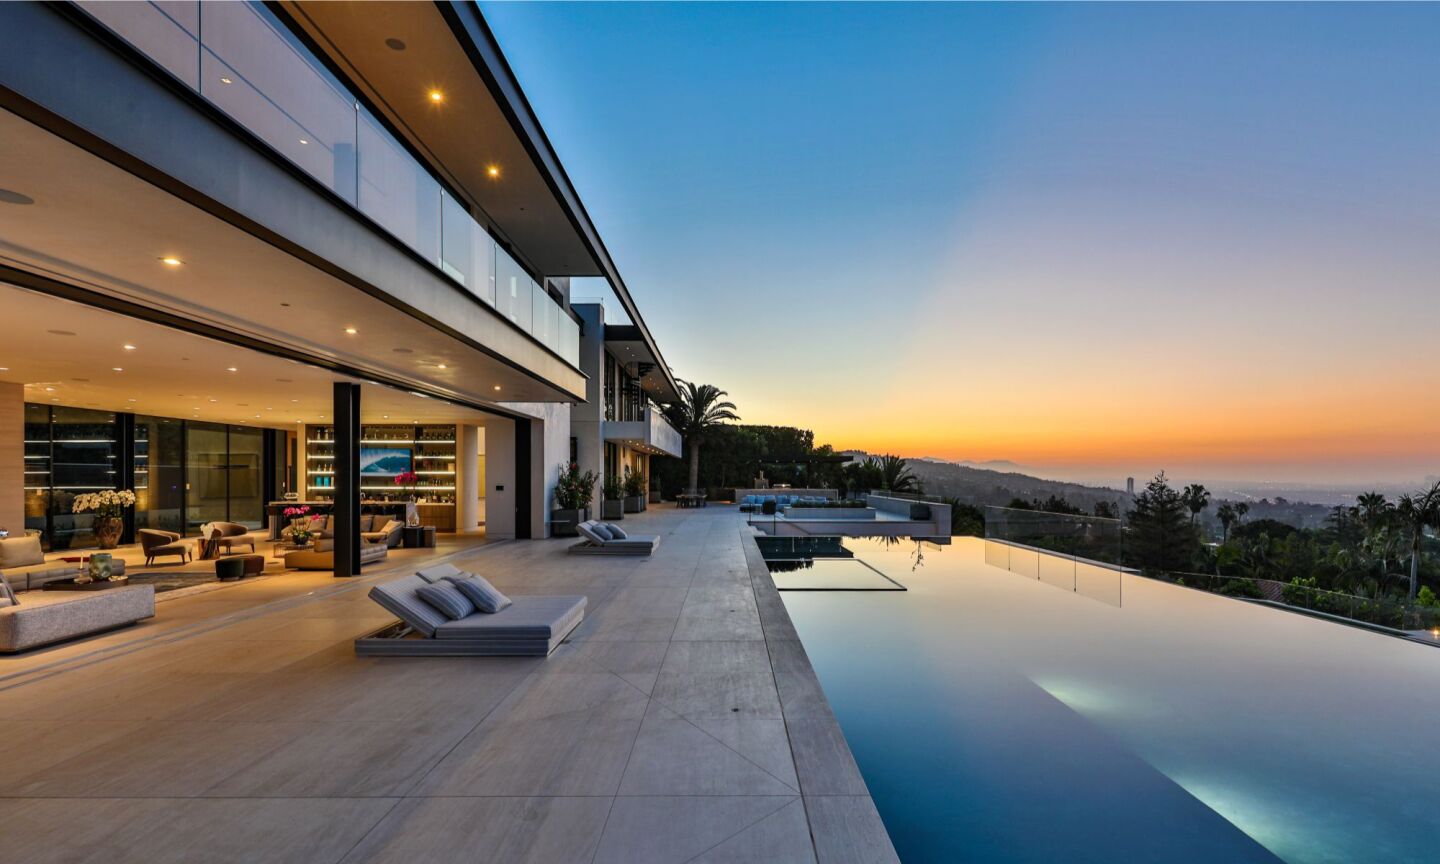 Raj Kanodia's Bel-Air mansion - Los Angeles Times